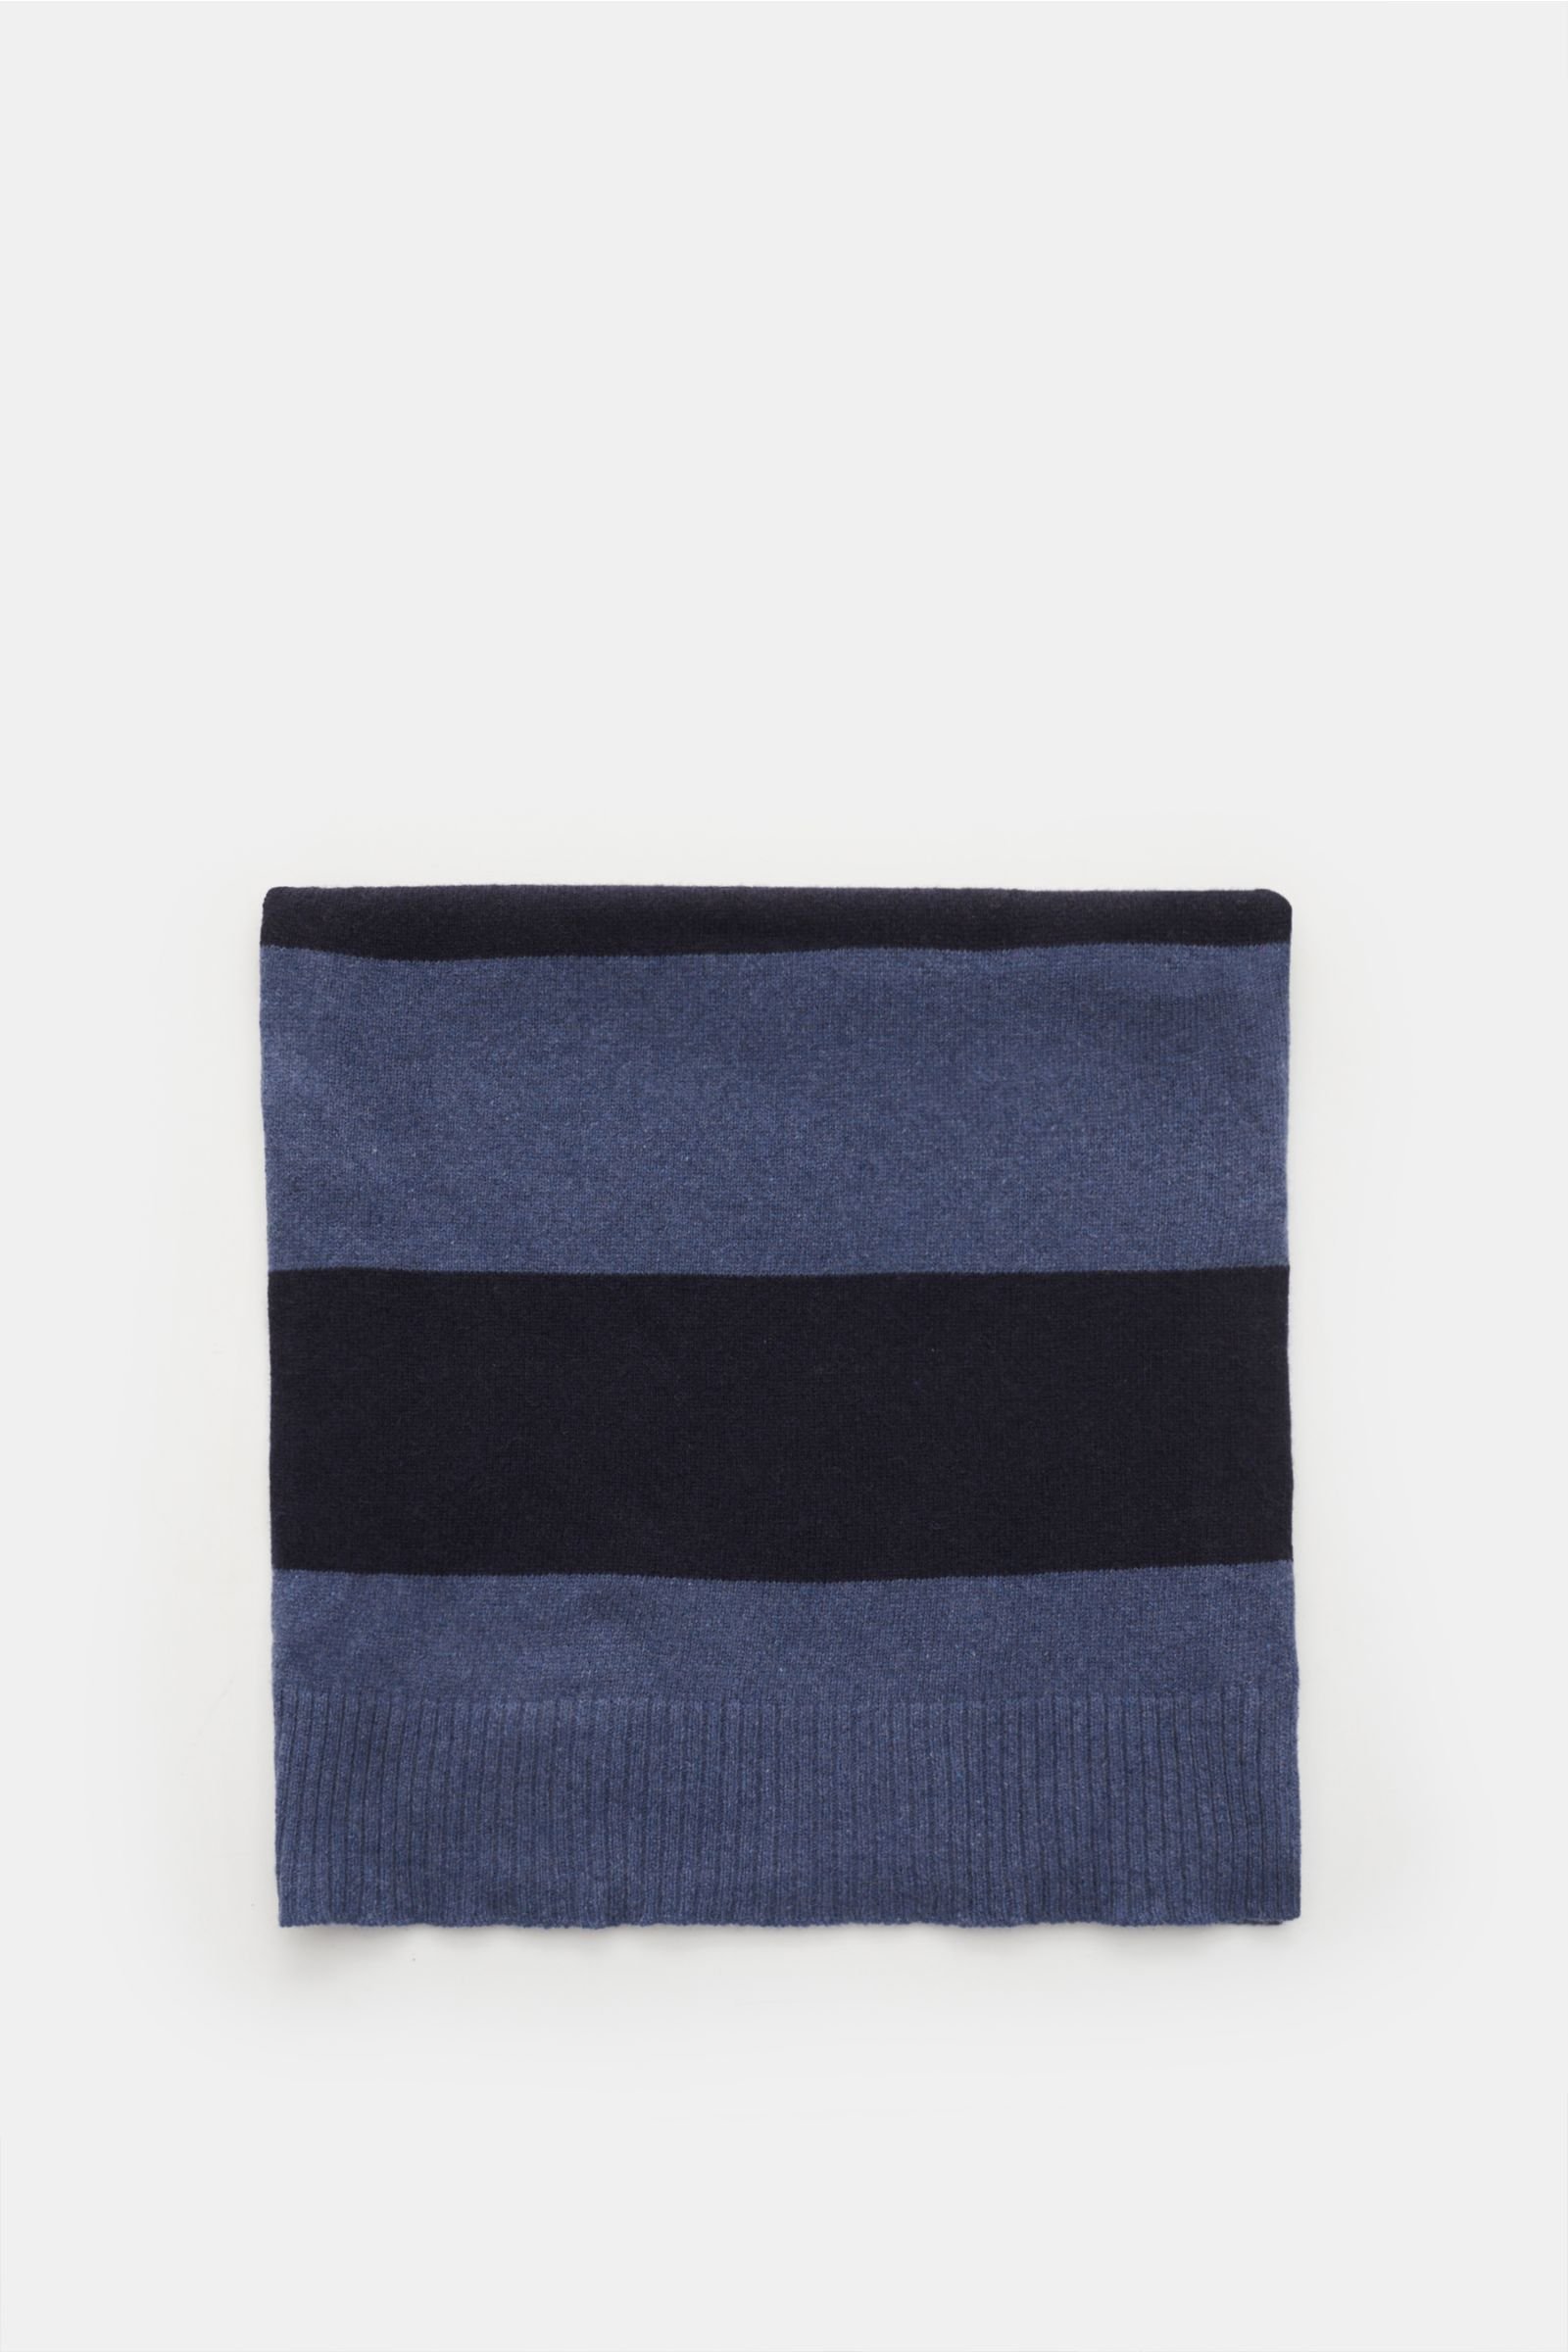 Cashmere scarf grey-blue/navy striped